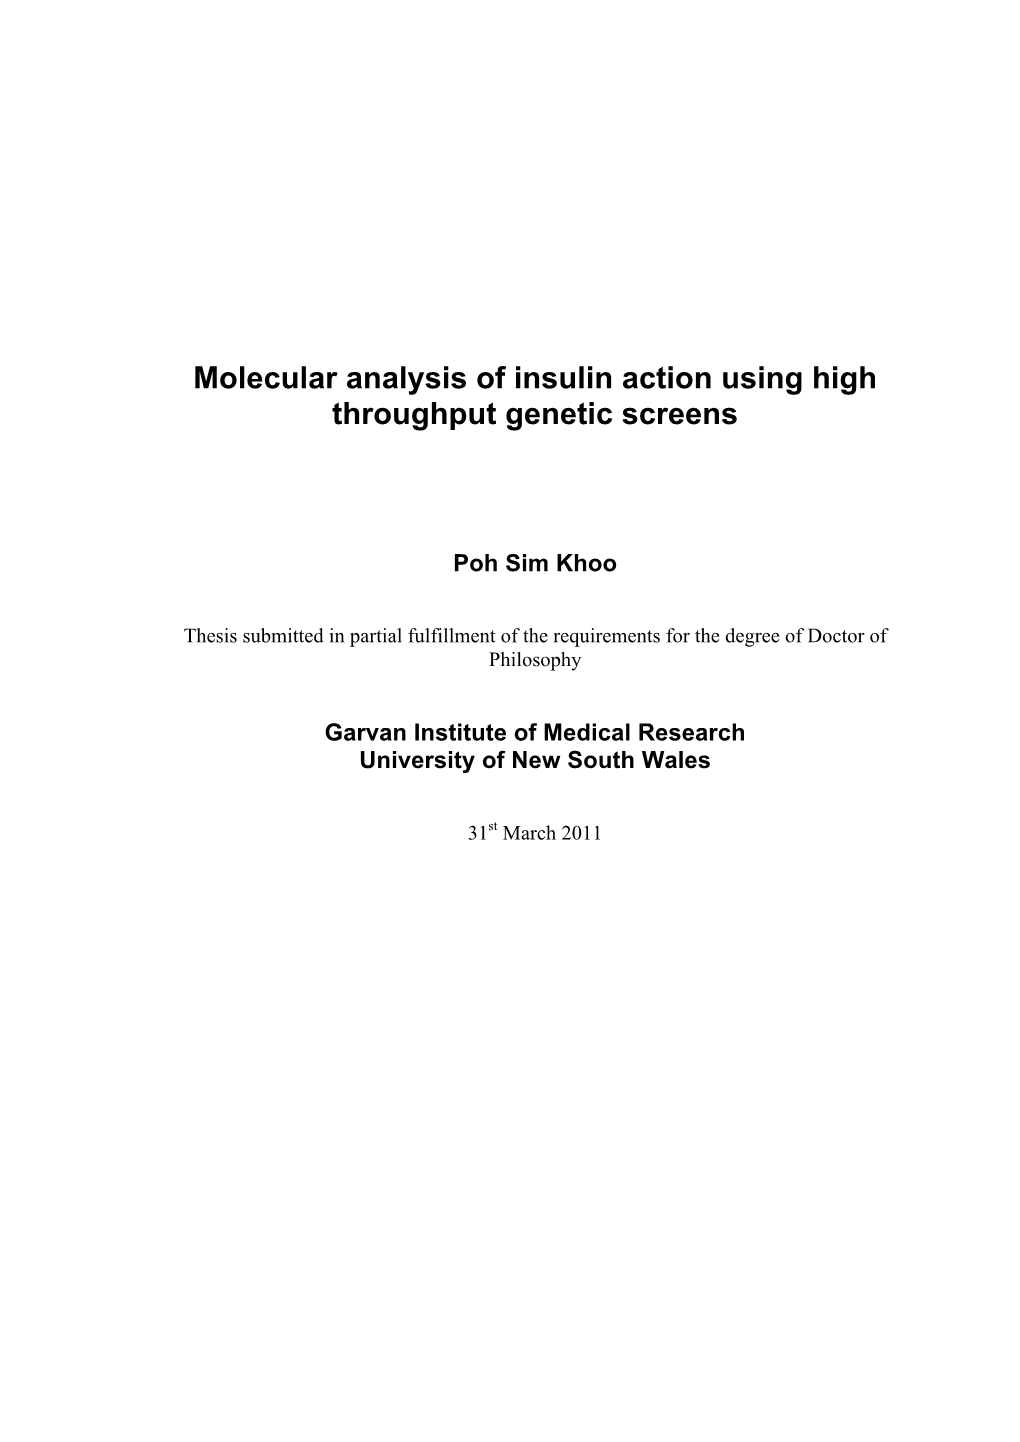 Molecular Analysis of Insulin Action Using High Throughput Genetic Screens